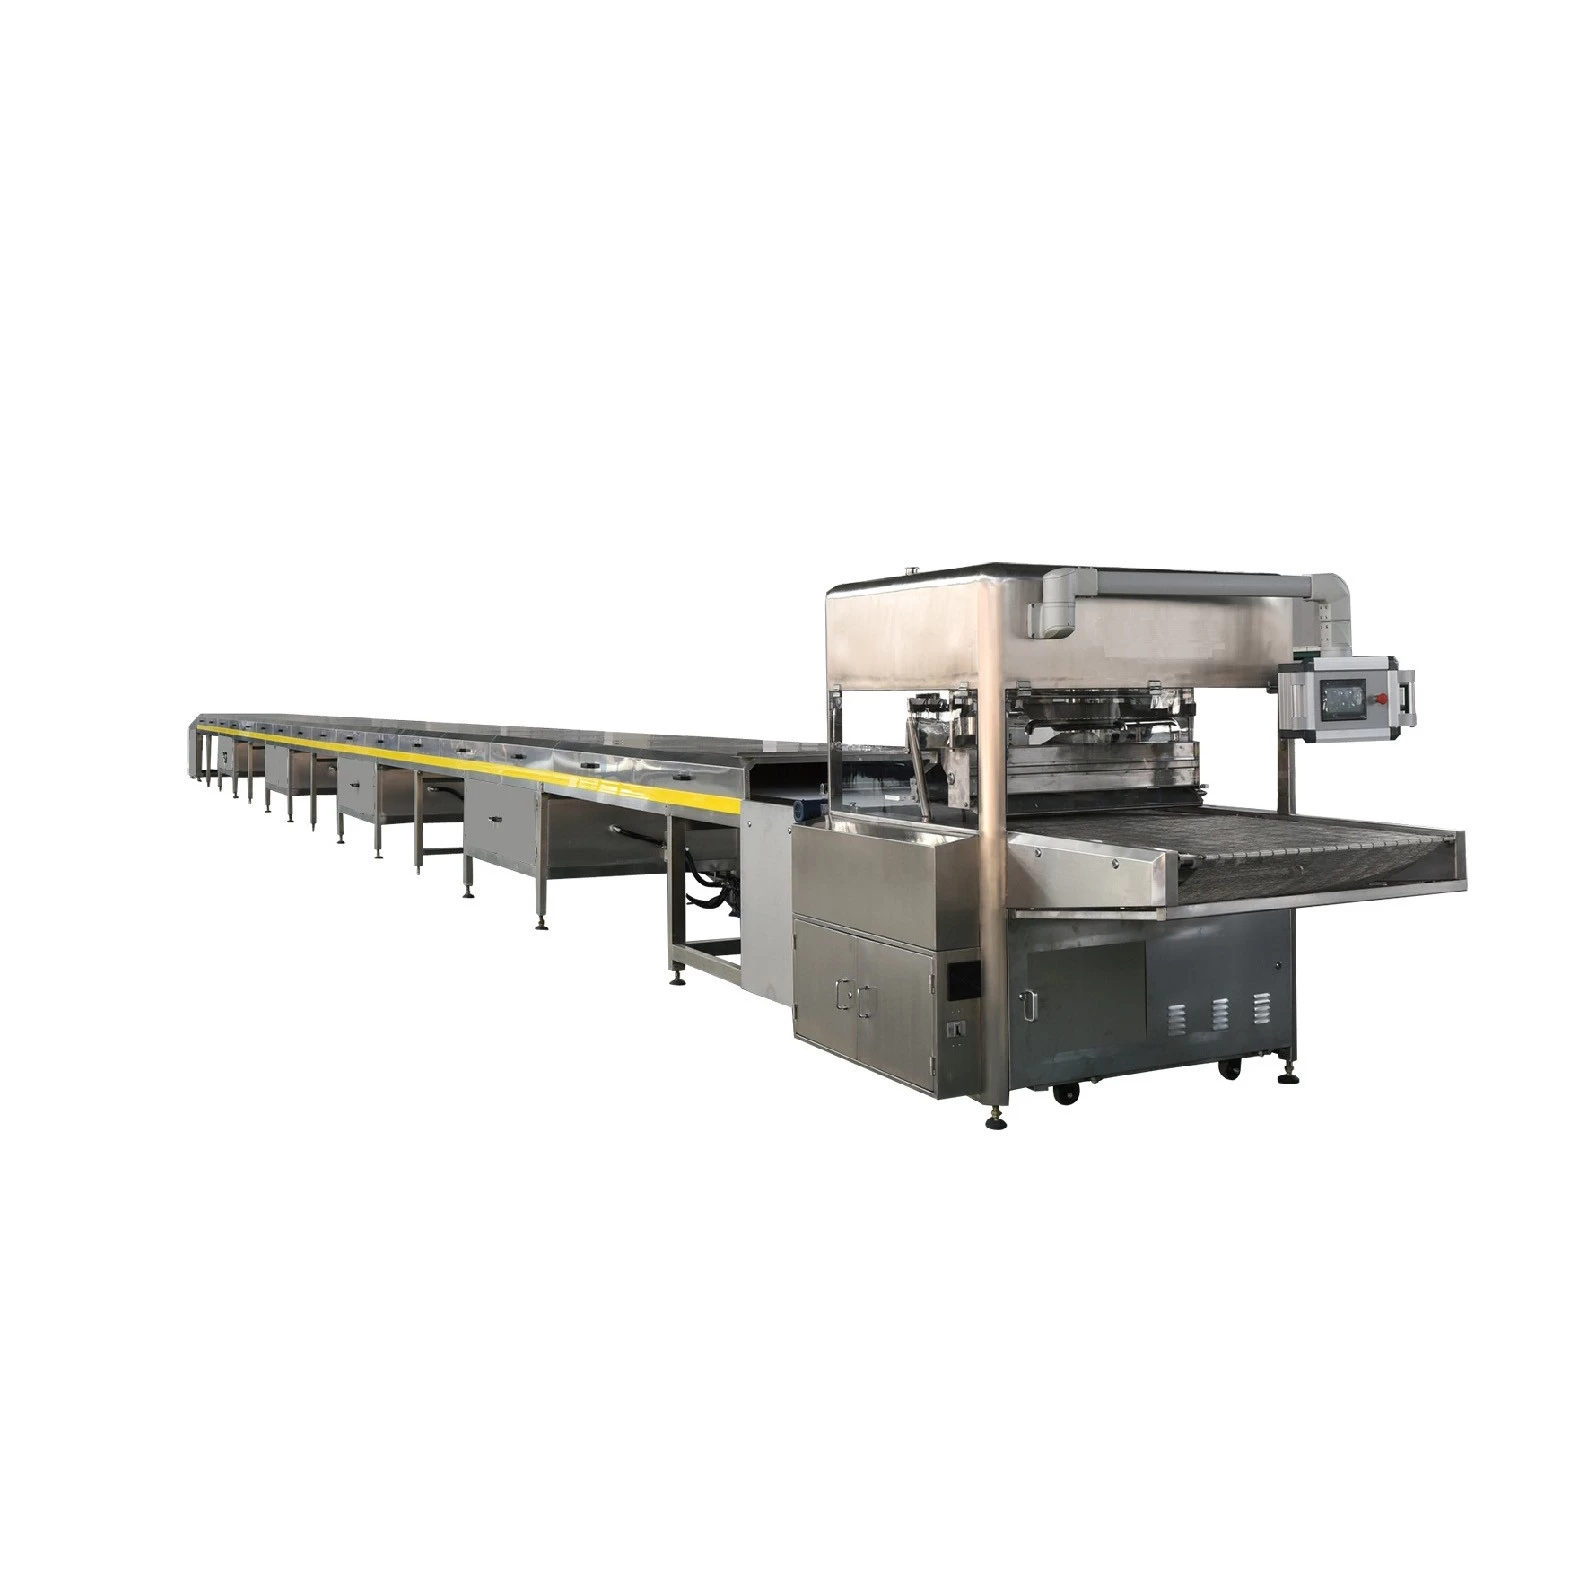 الصين SJP400 series chocolate enrobing machine/chocolate coating machine/enrobing line الصانع